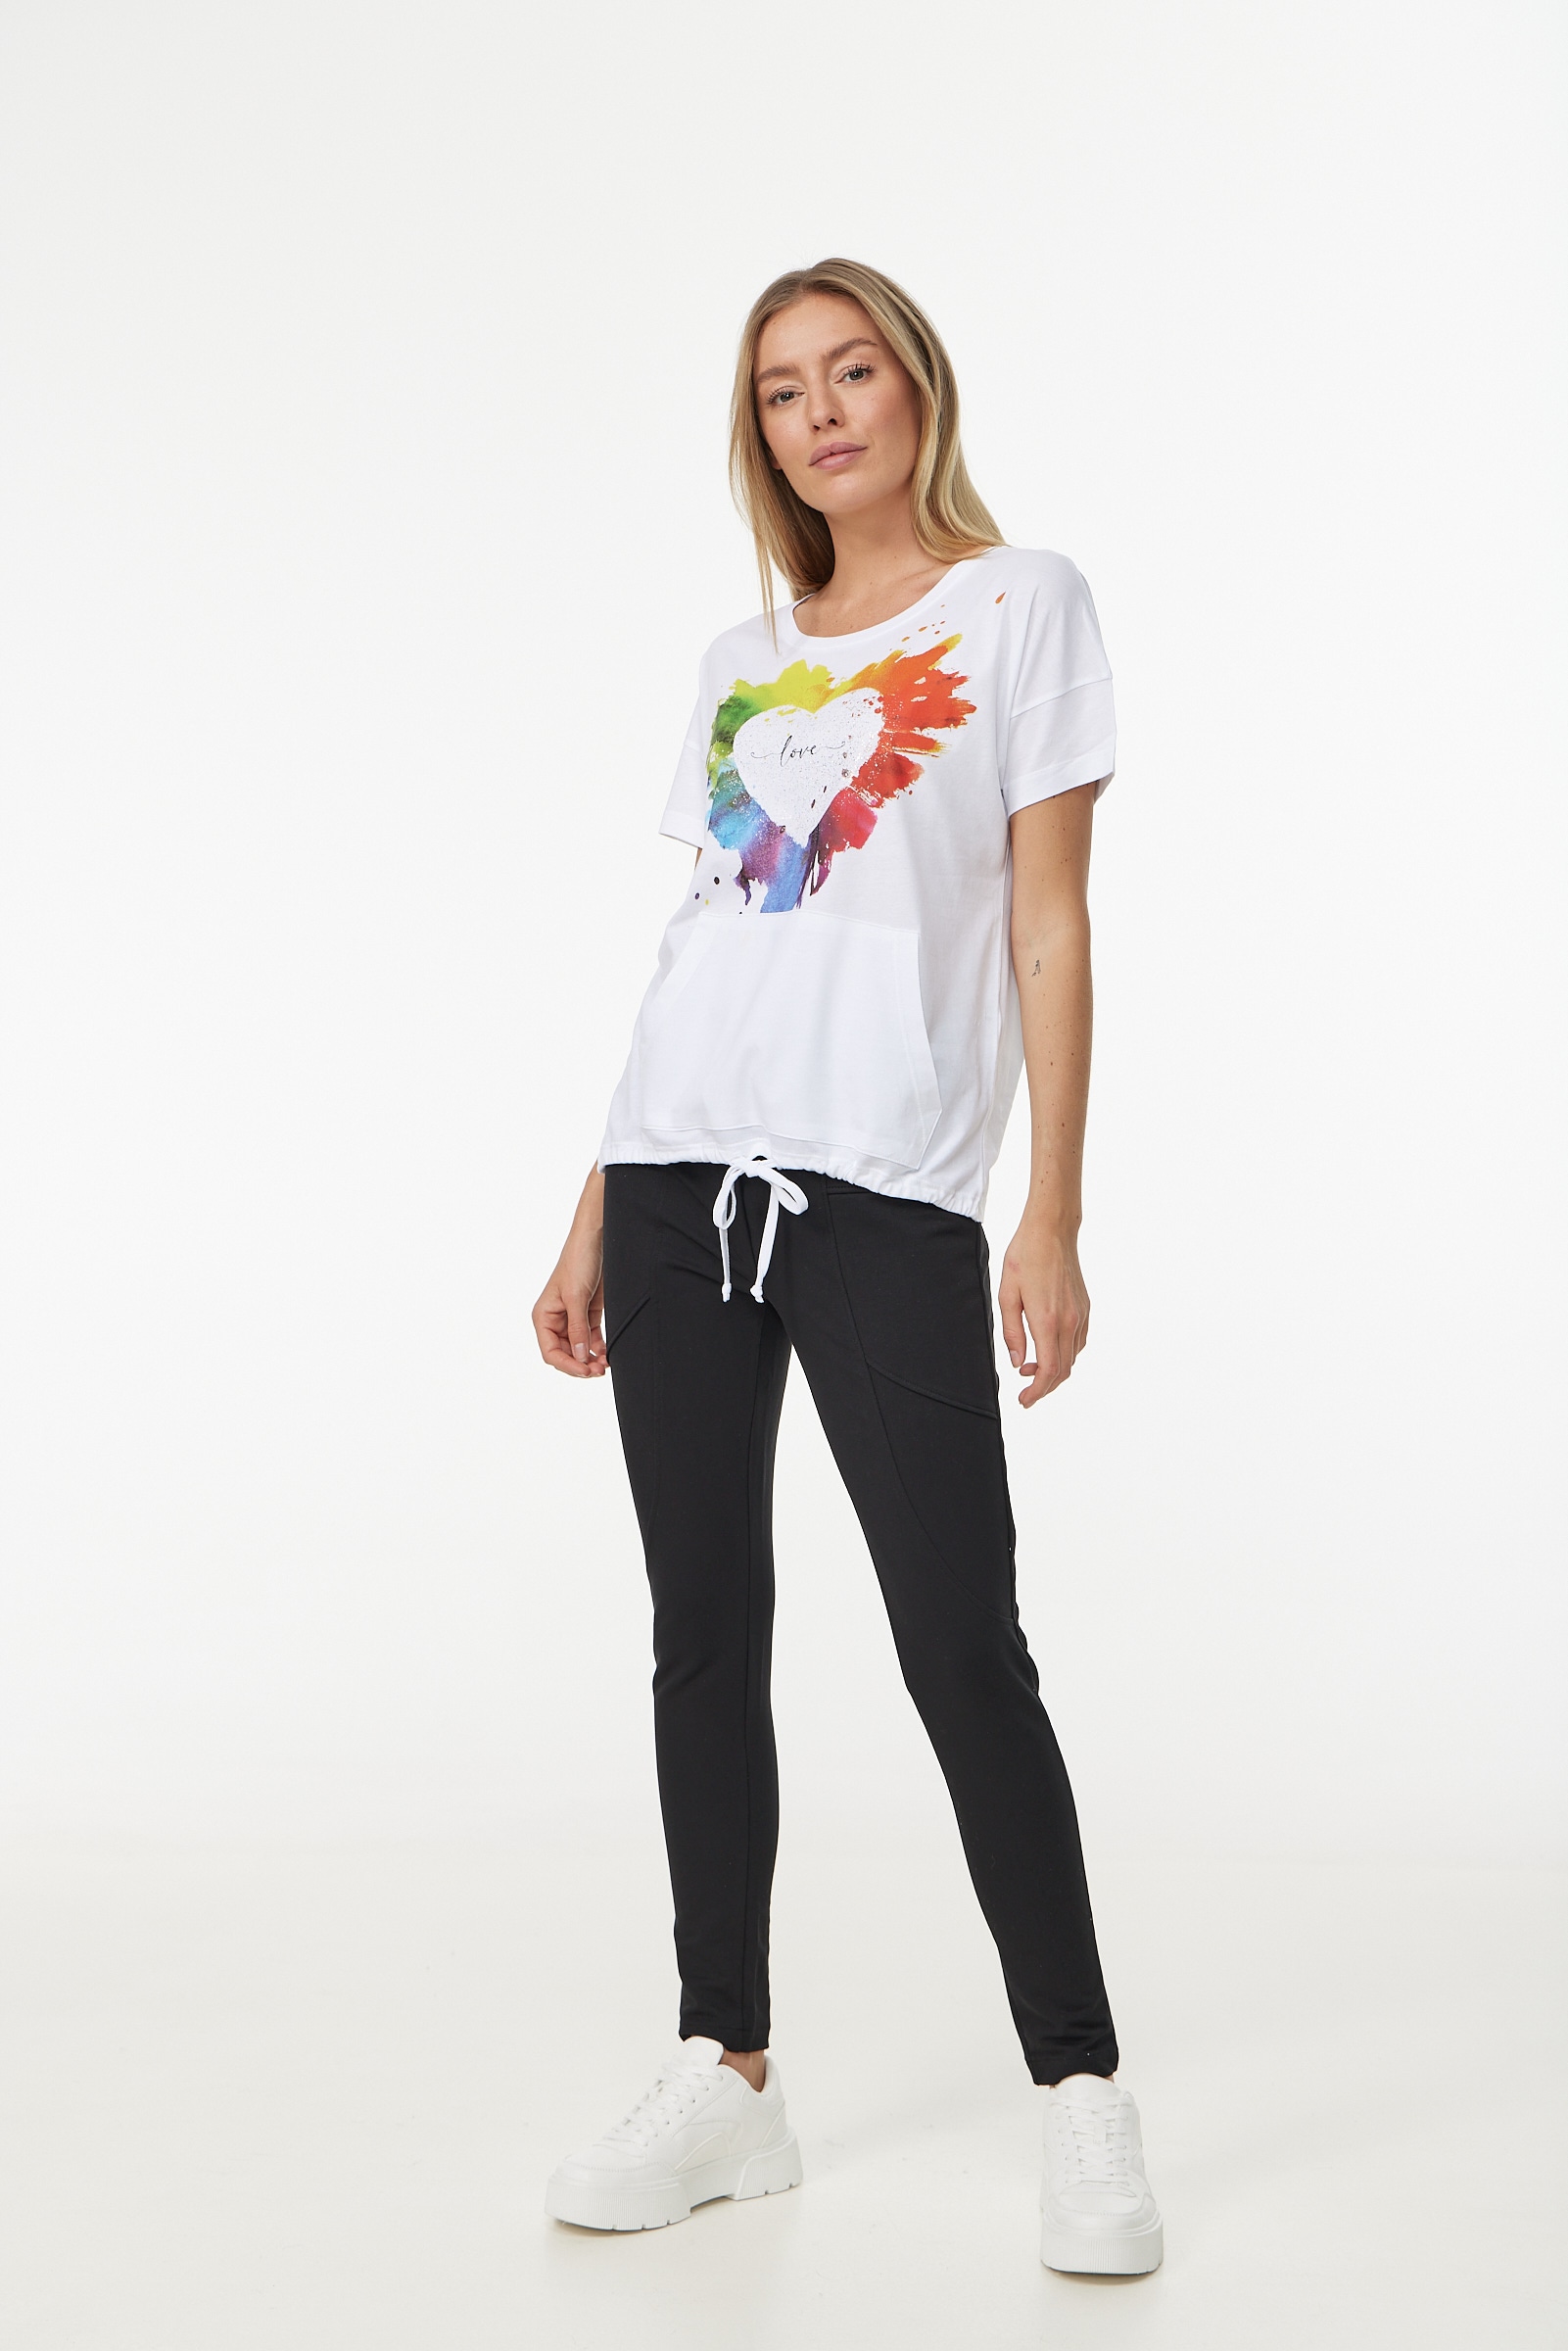 Frontprint | BAUR farbenfrohem mit T-Shirt, Decay bestellen